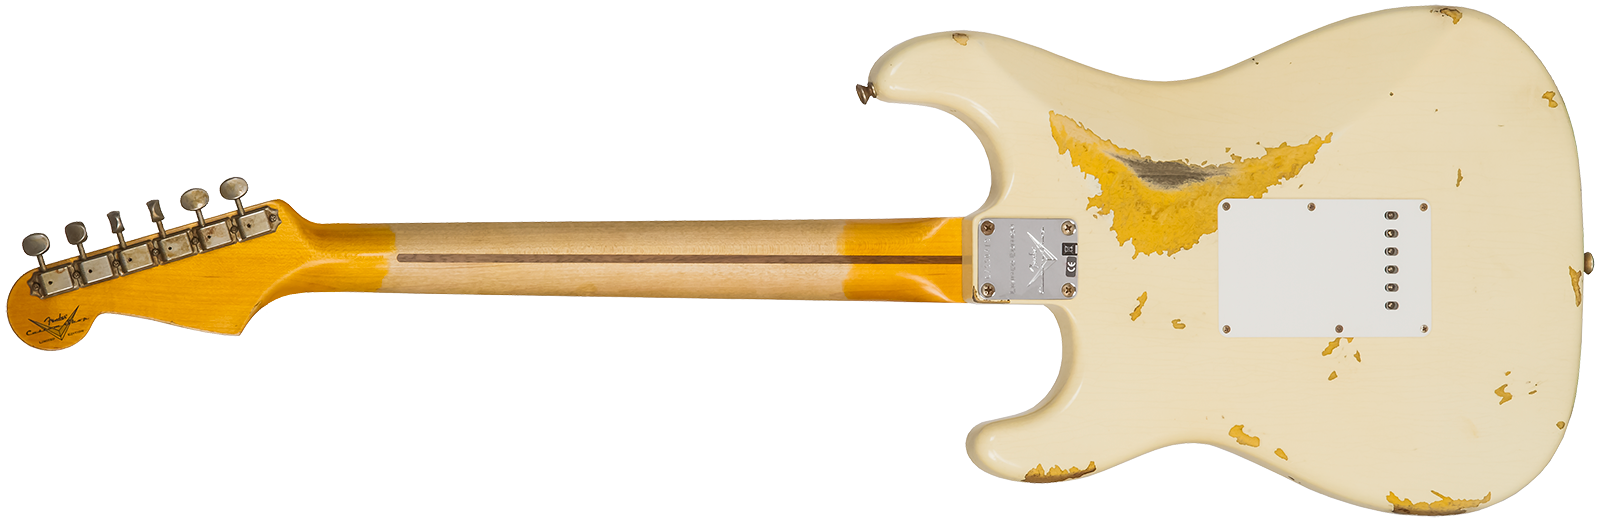 Fender Custom Shop Strat 1956 3s Trem Mn #cz550419 - Heavy Relic Vintage White Over Sunburst - Televorm elektrische gitaar - Variation 1